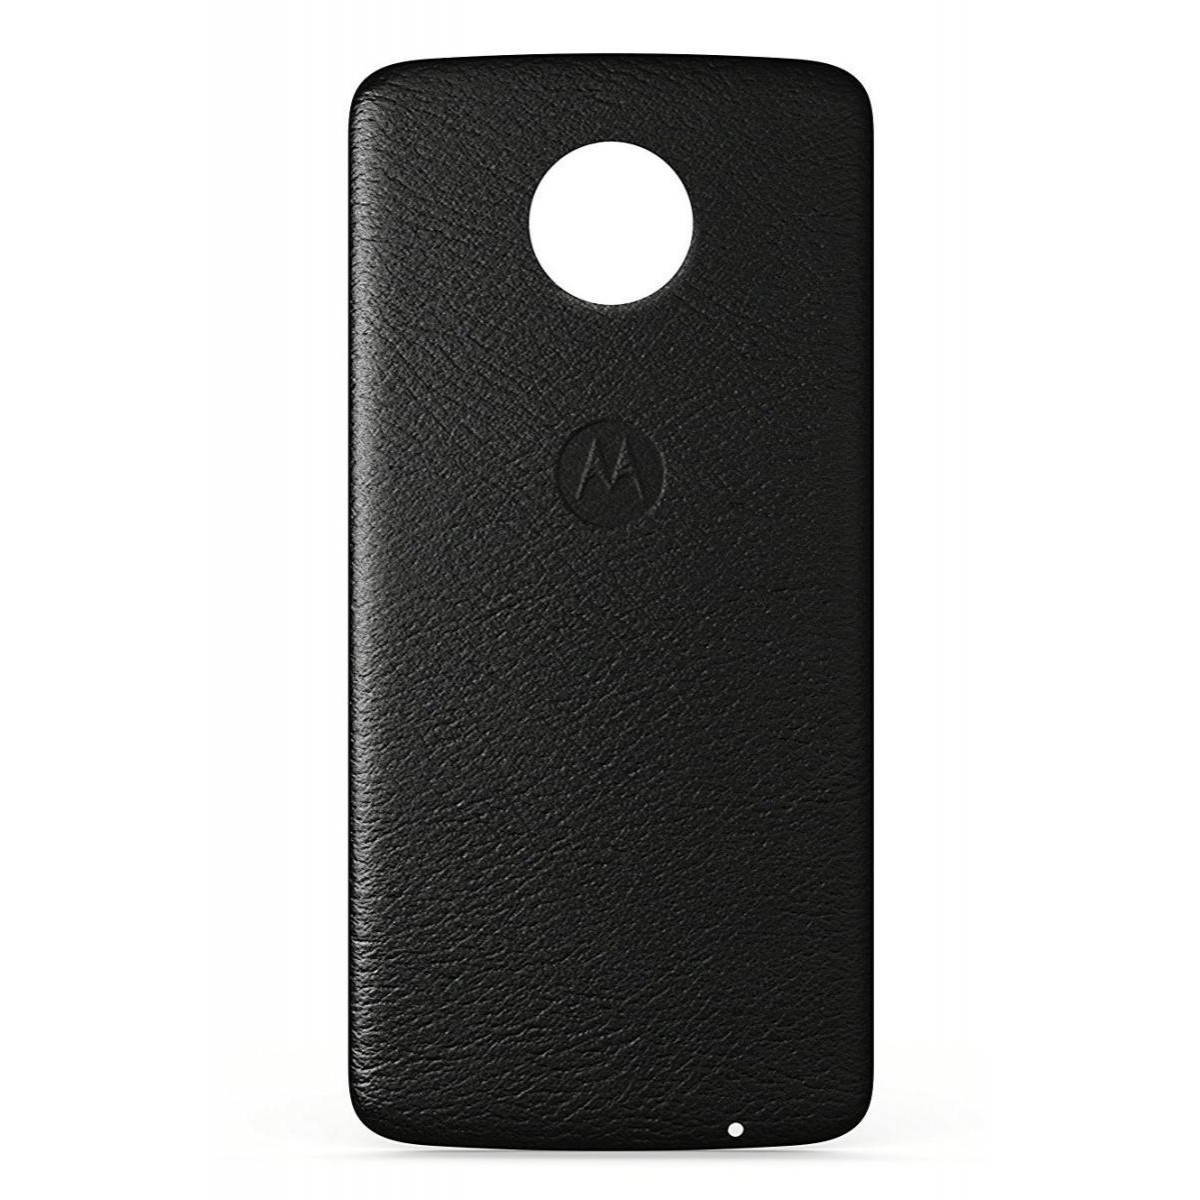 Motorola Style Shell Moto Mod for Moto Z Black Leather (ASMCAPBKLREU) - зображення 1